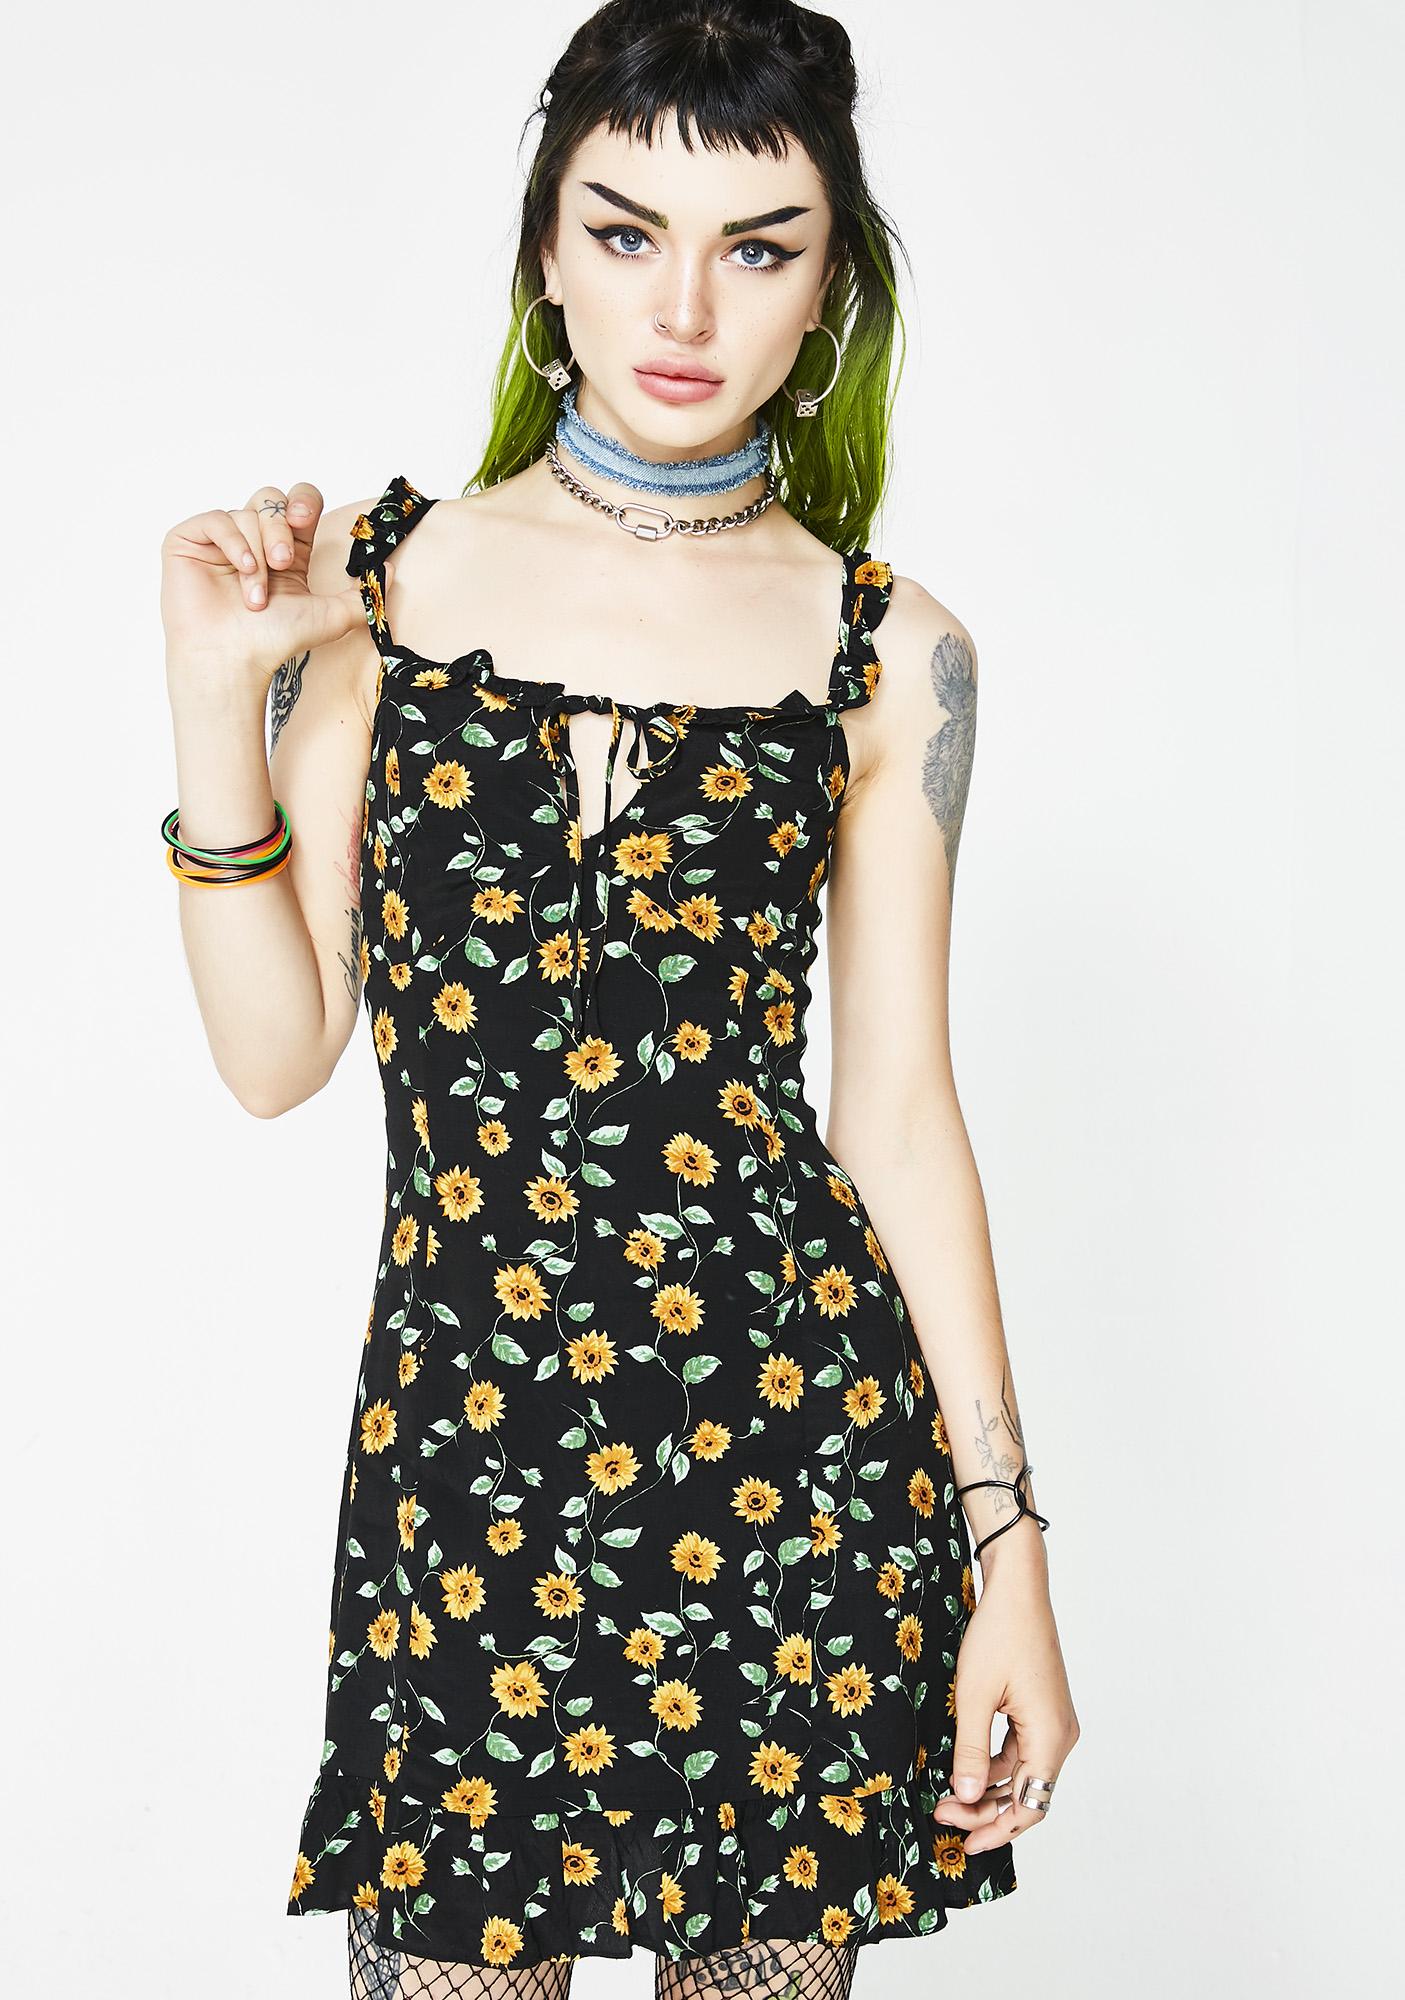 sunflower mini dress